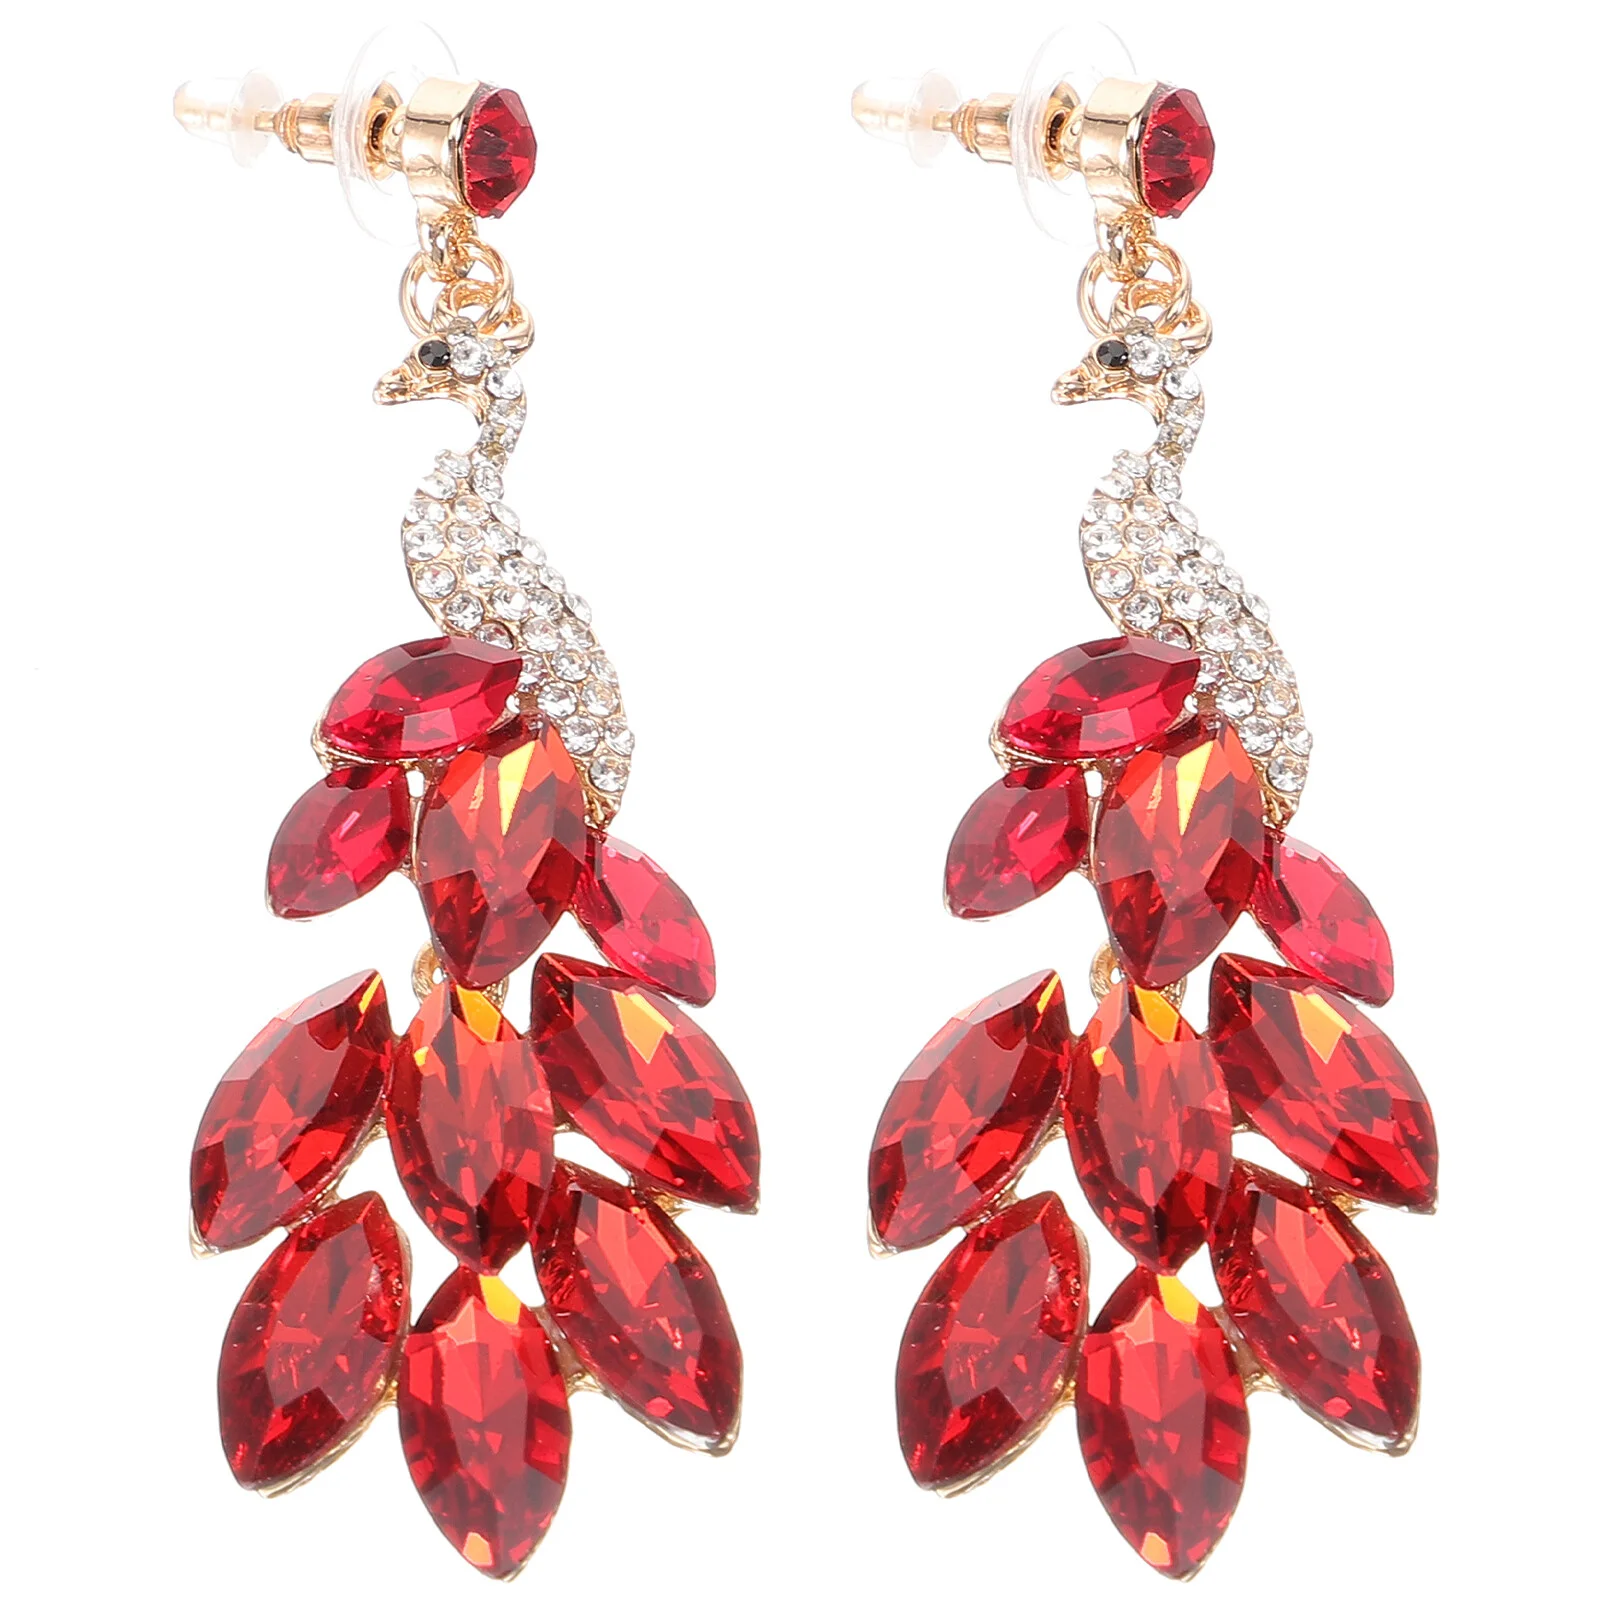 

Peacock Women's Earrings Decorative Rhinestone Jewelry Dangle Pearl Fashion Gifts Diamond Trendy Statement Bohemia Drop